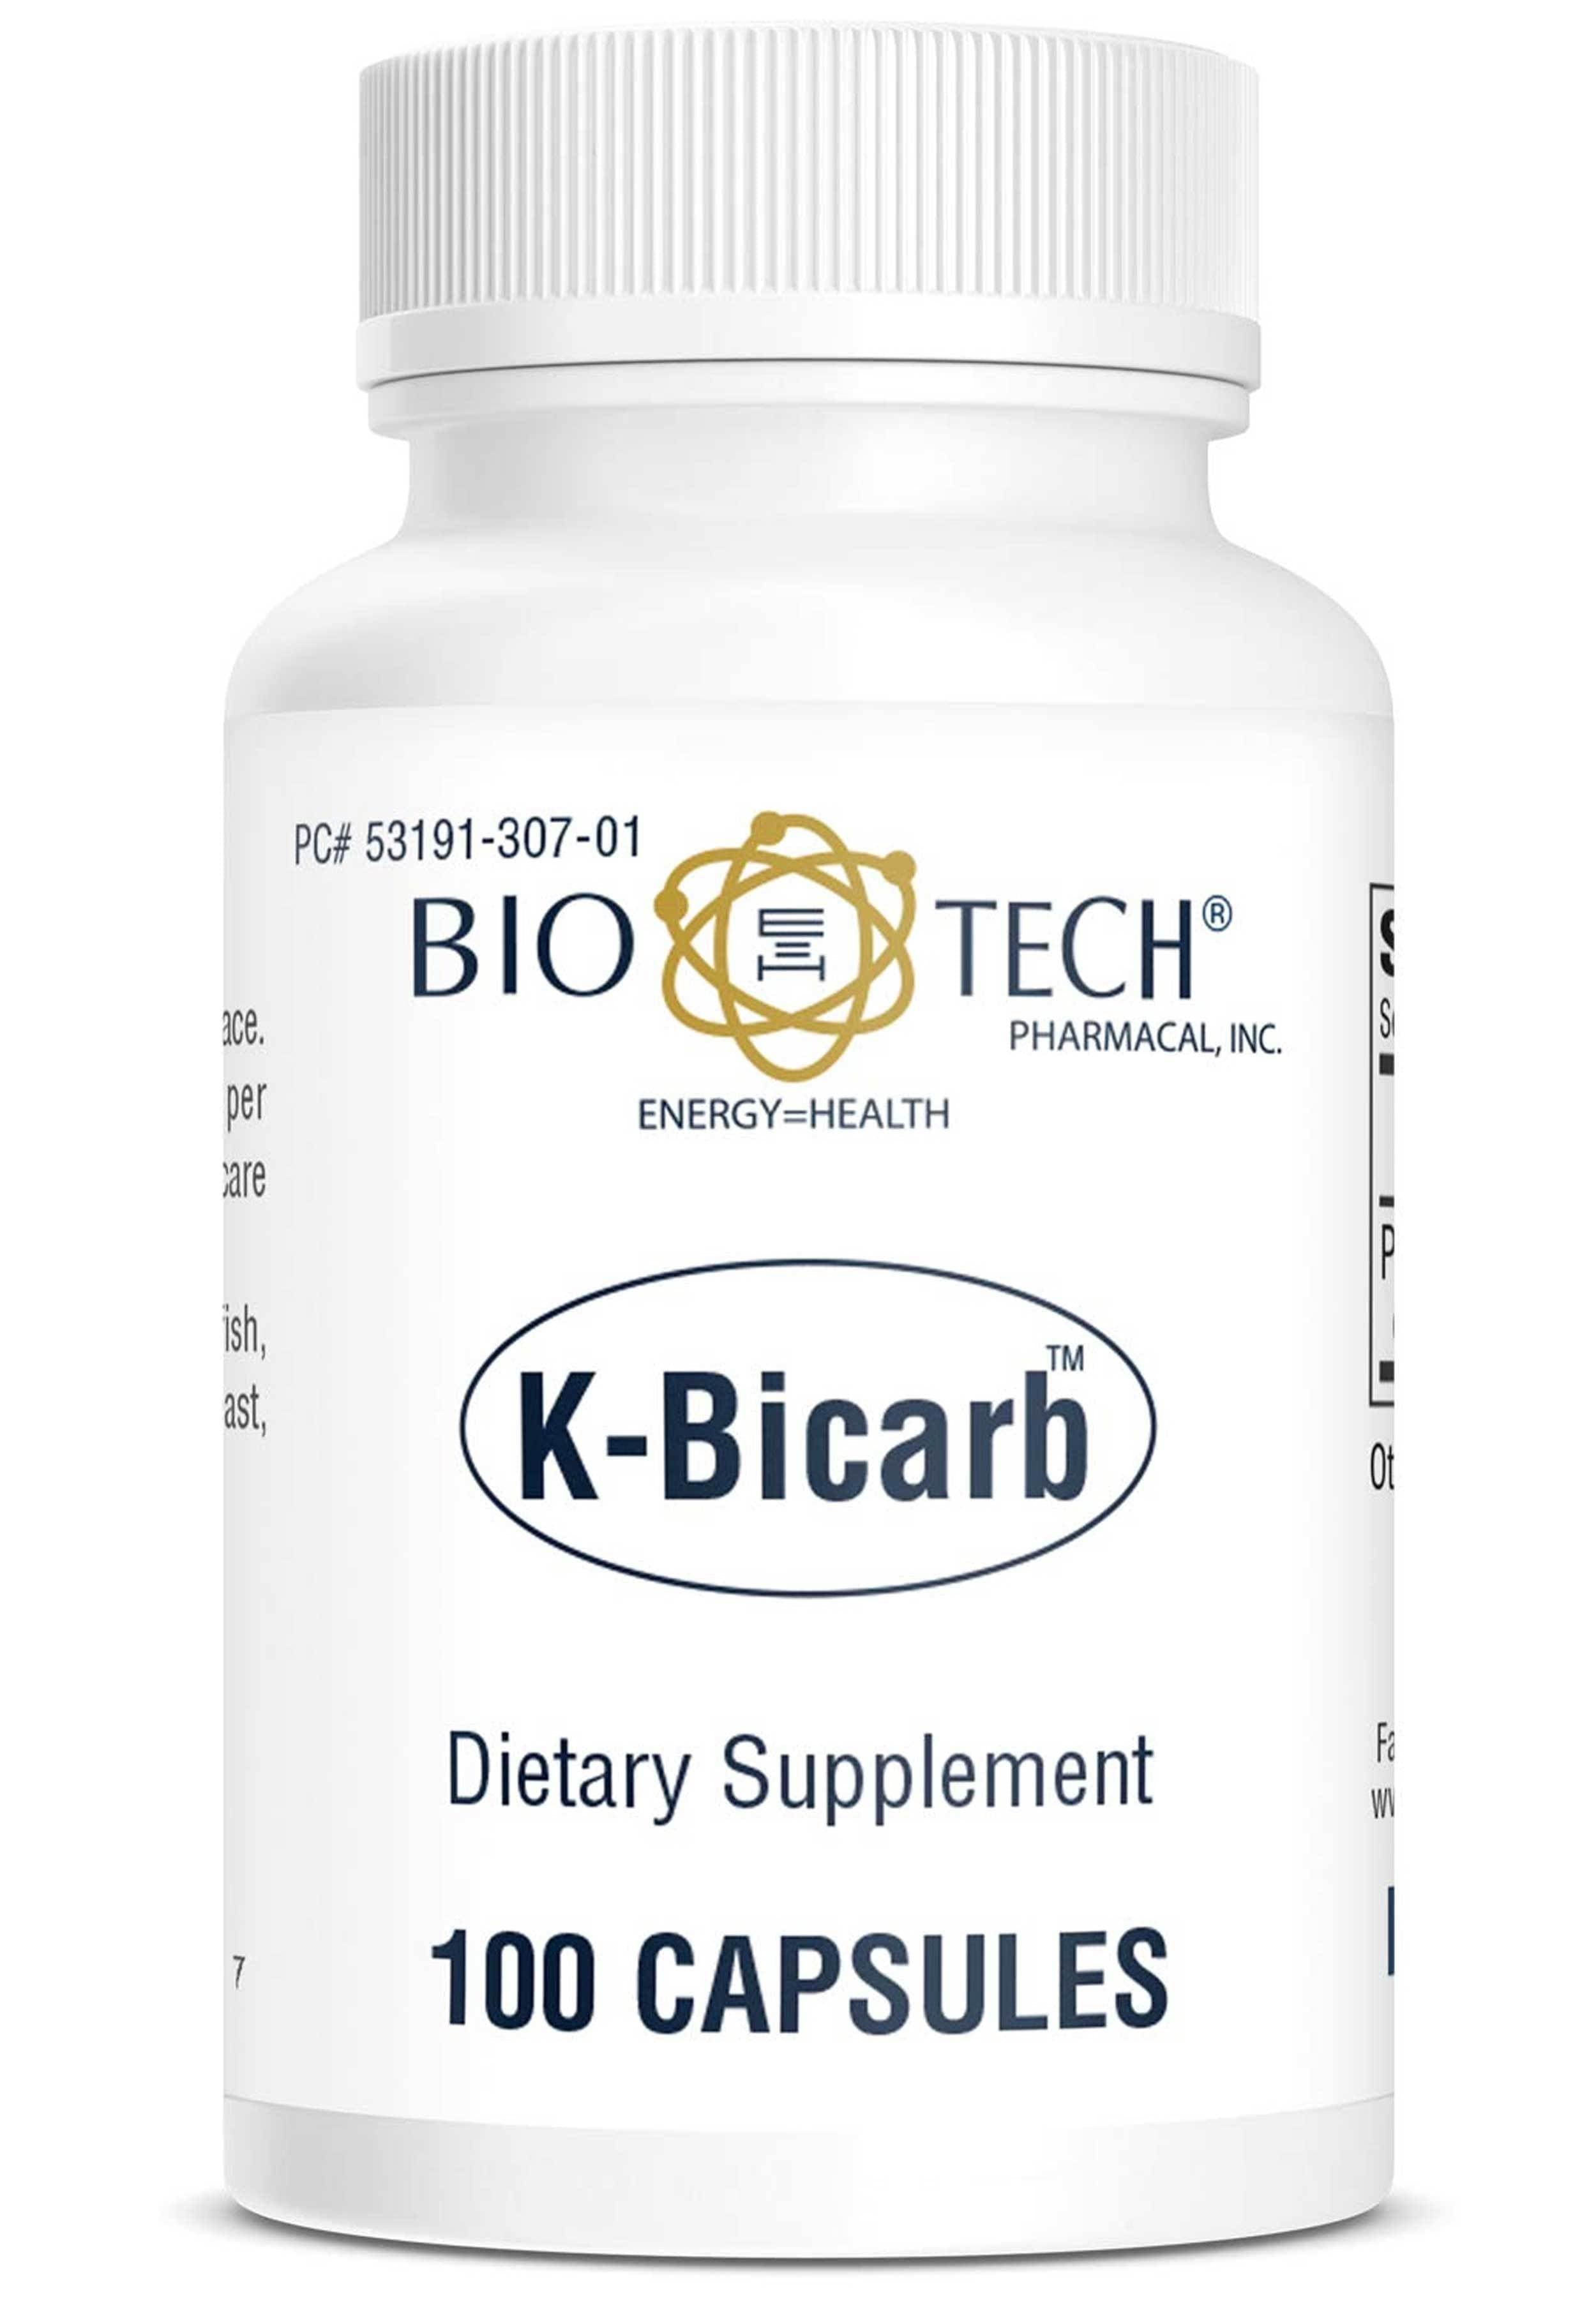 Bio-Tech Pharmacal K-Bicarb